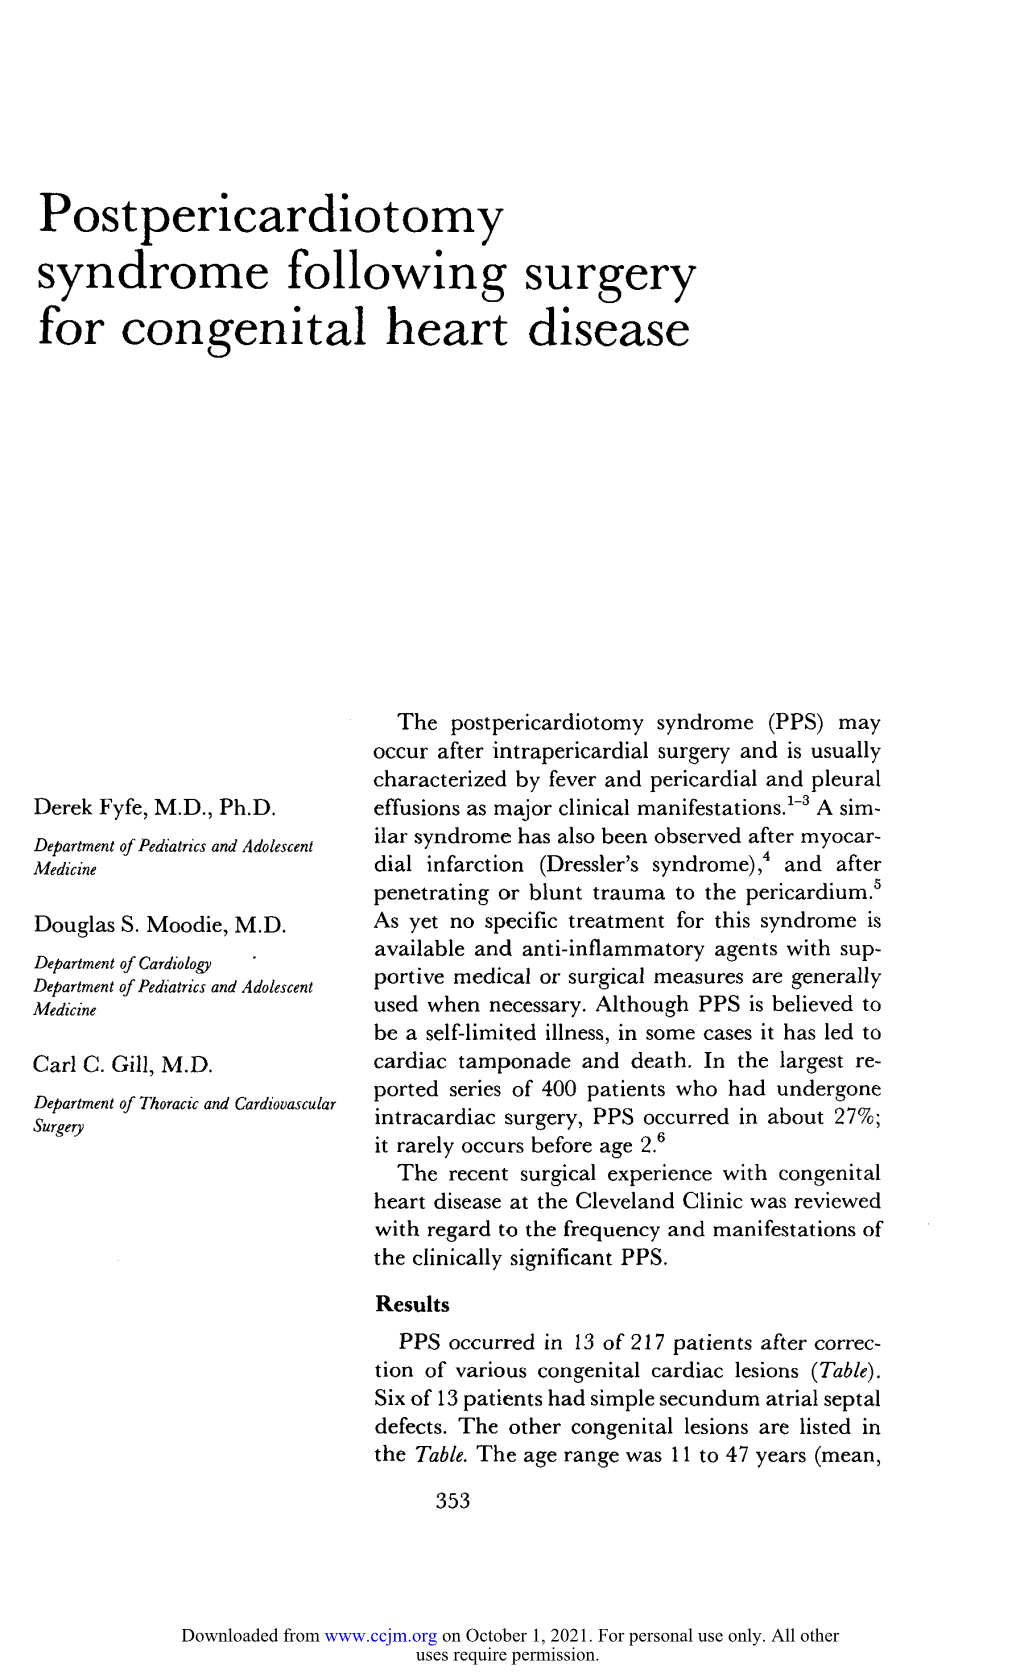 Postpericardiotomy Syndrome Following Surgery for Congenital Heart Disease